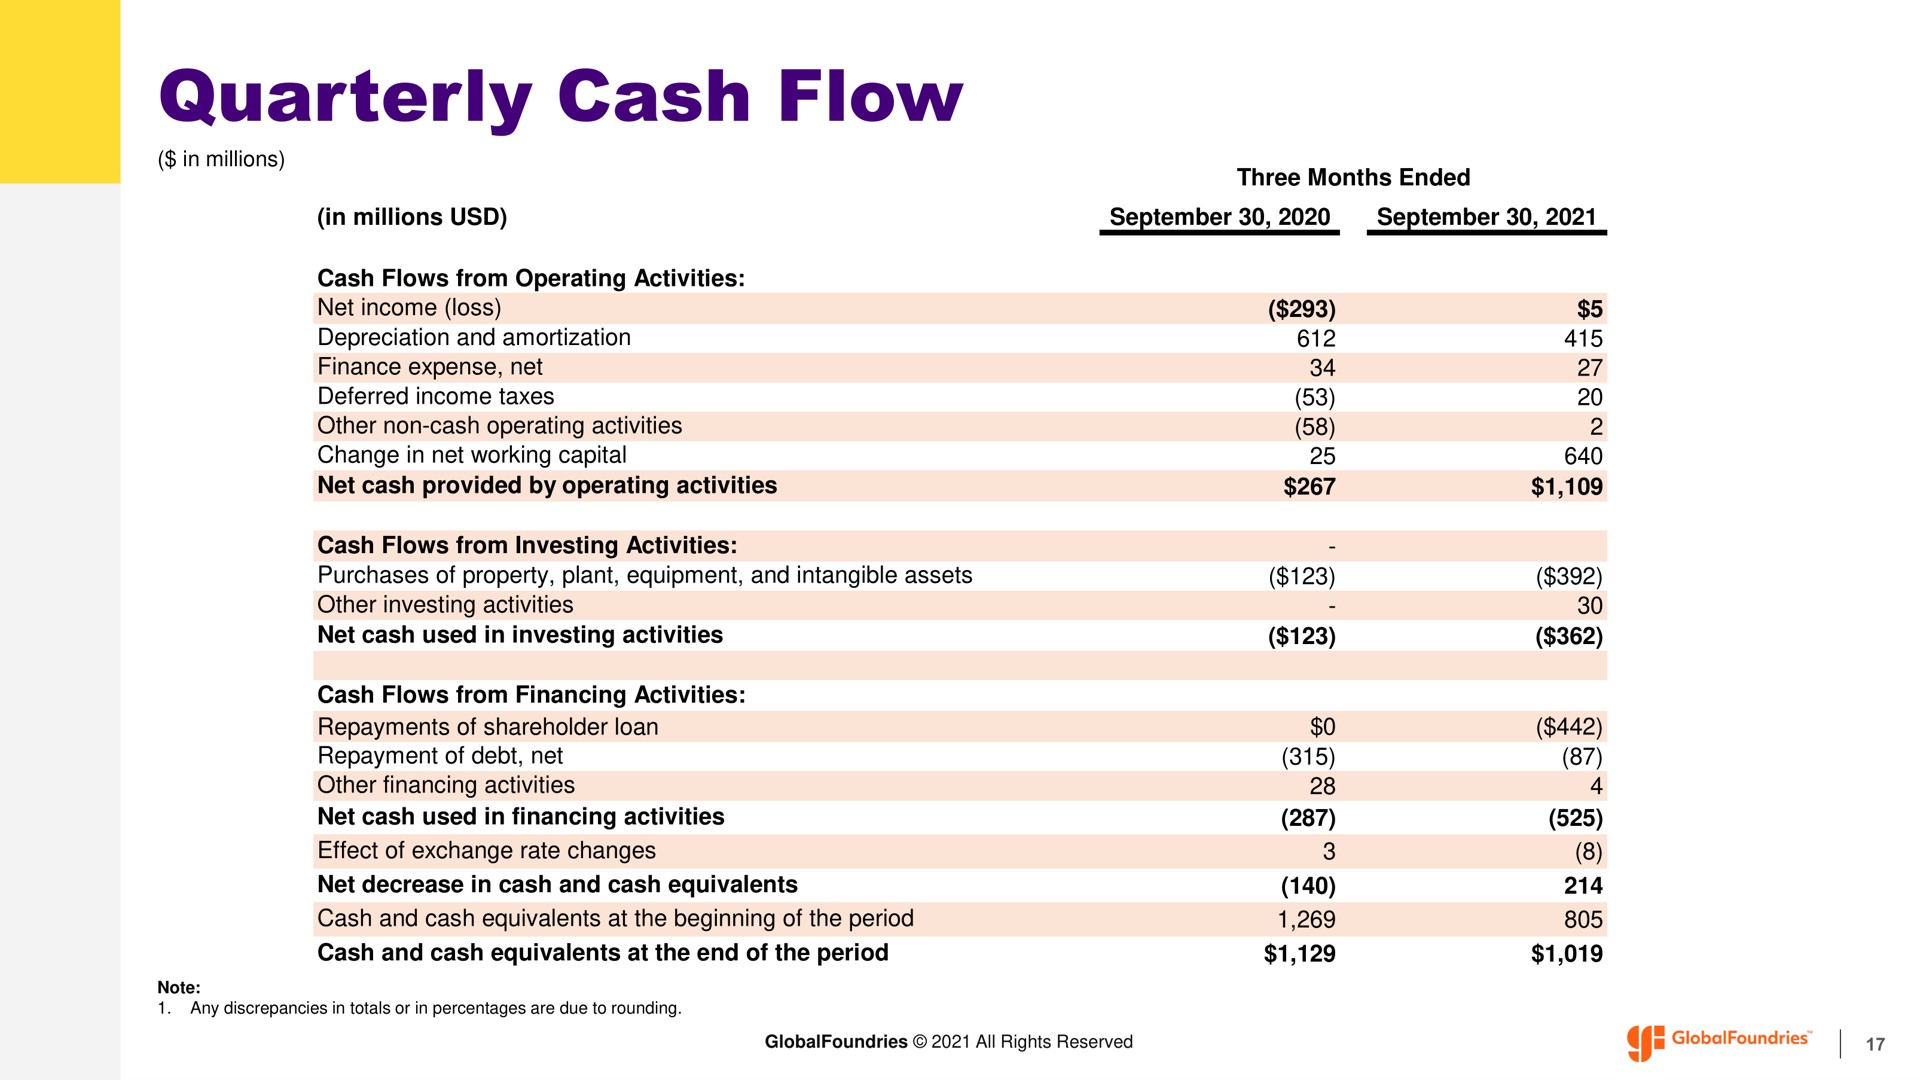 quarterly cash flow | GlobalFoundries